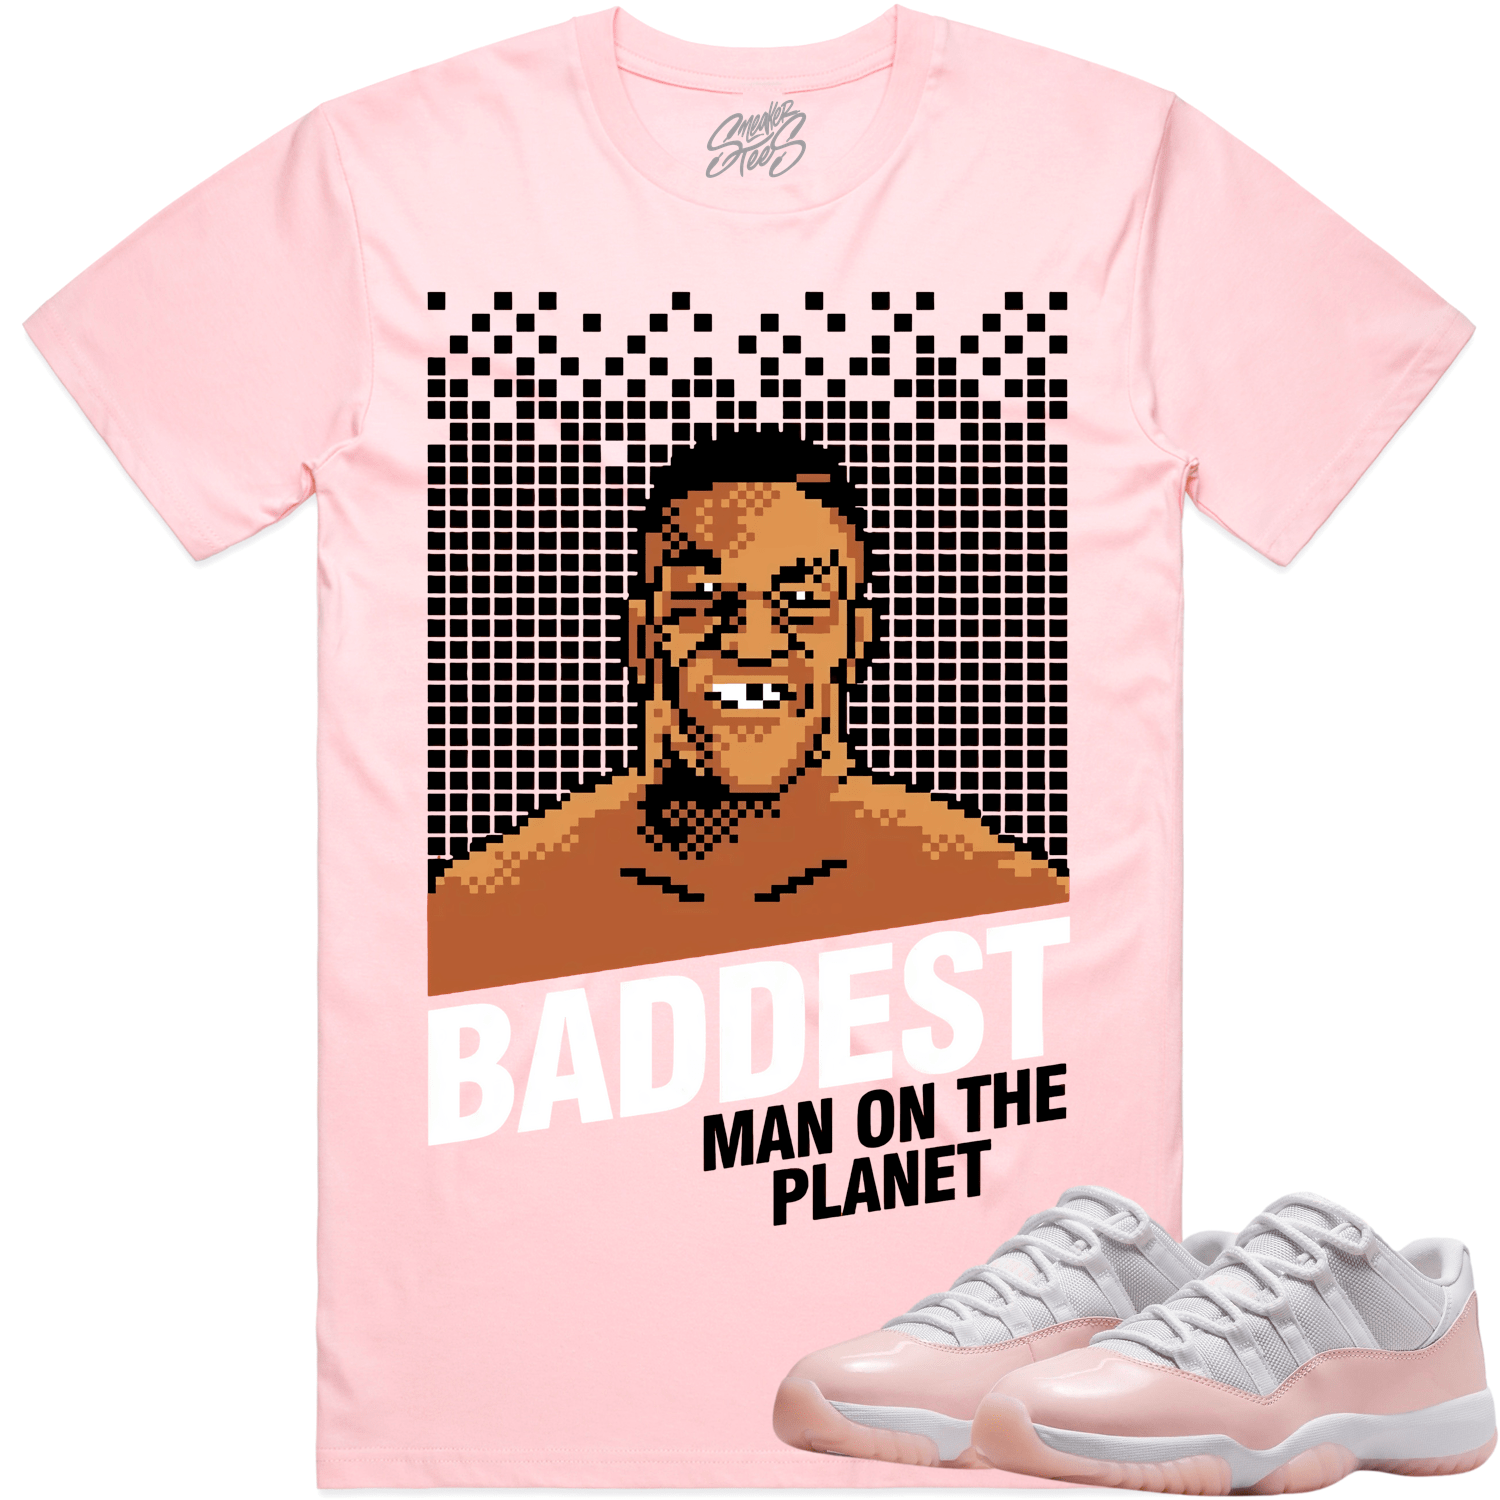 Legend Pink 11s Shirt - Jordan 11 Low Pink Sneaker Tees - Baddest